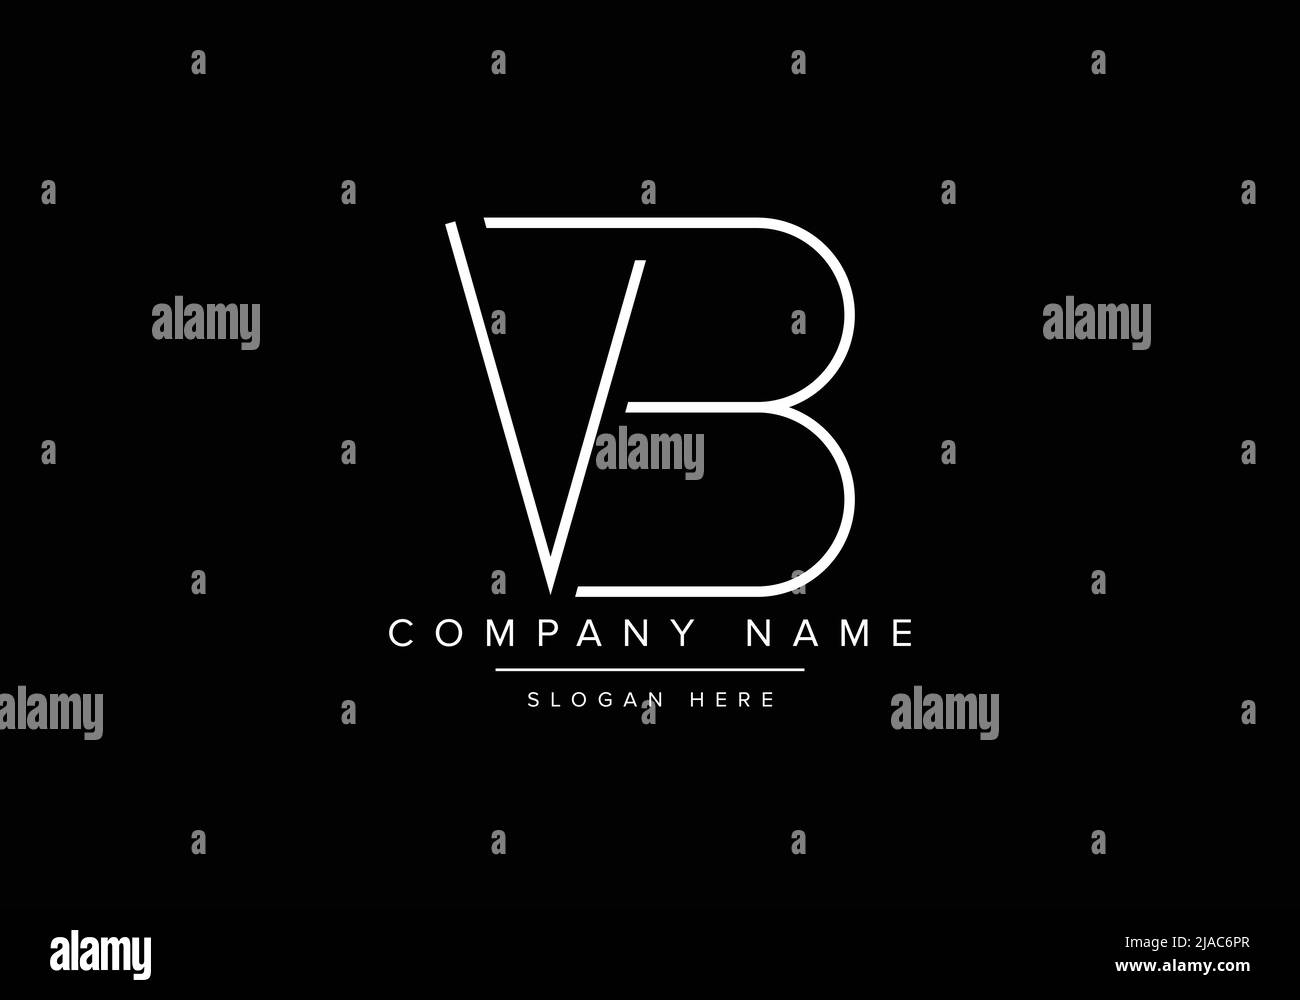 Creative minimal line art icon logo, VB monogram logo Stock Vector